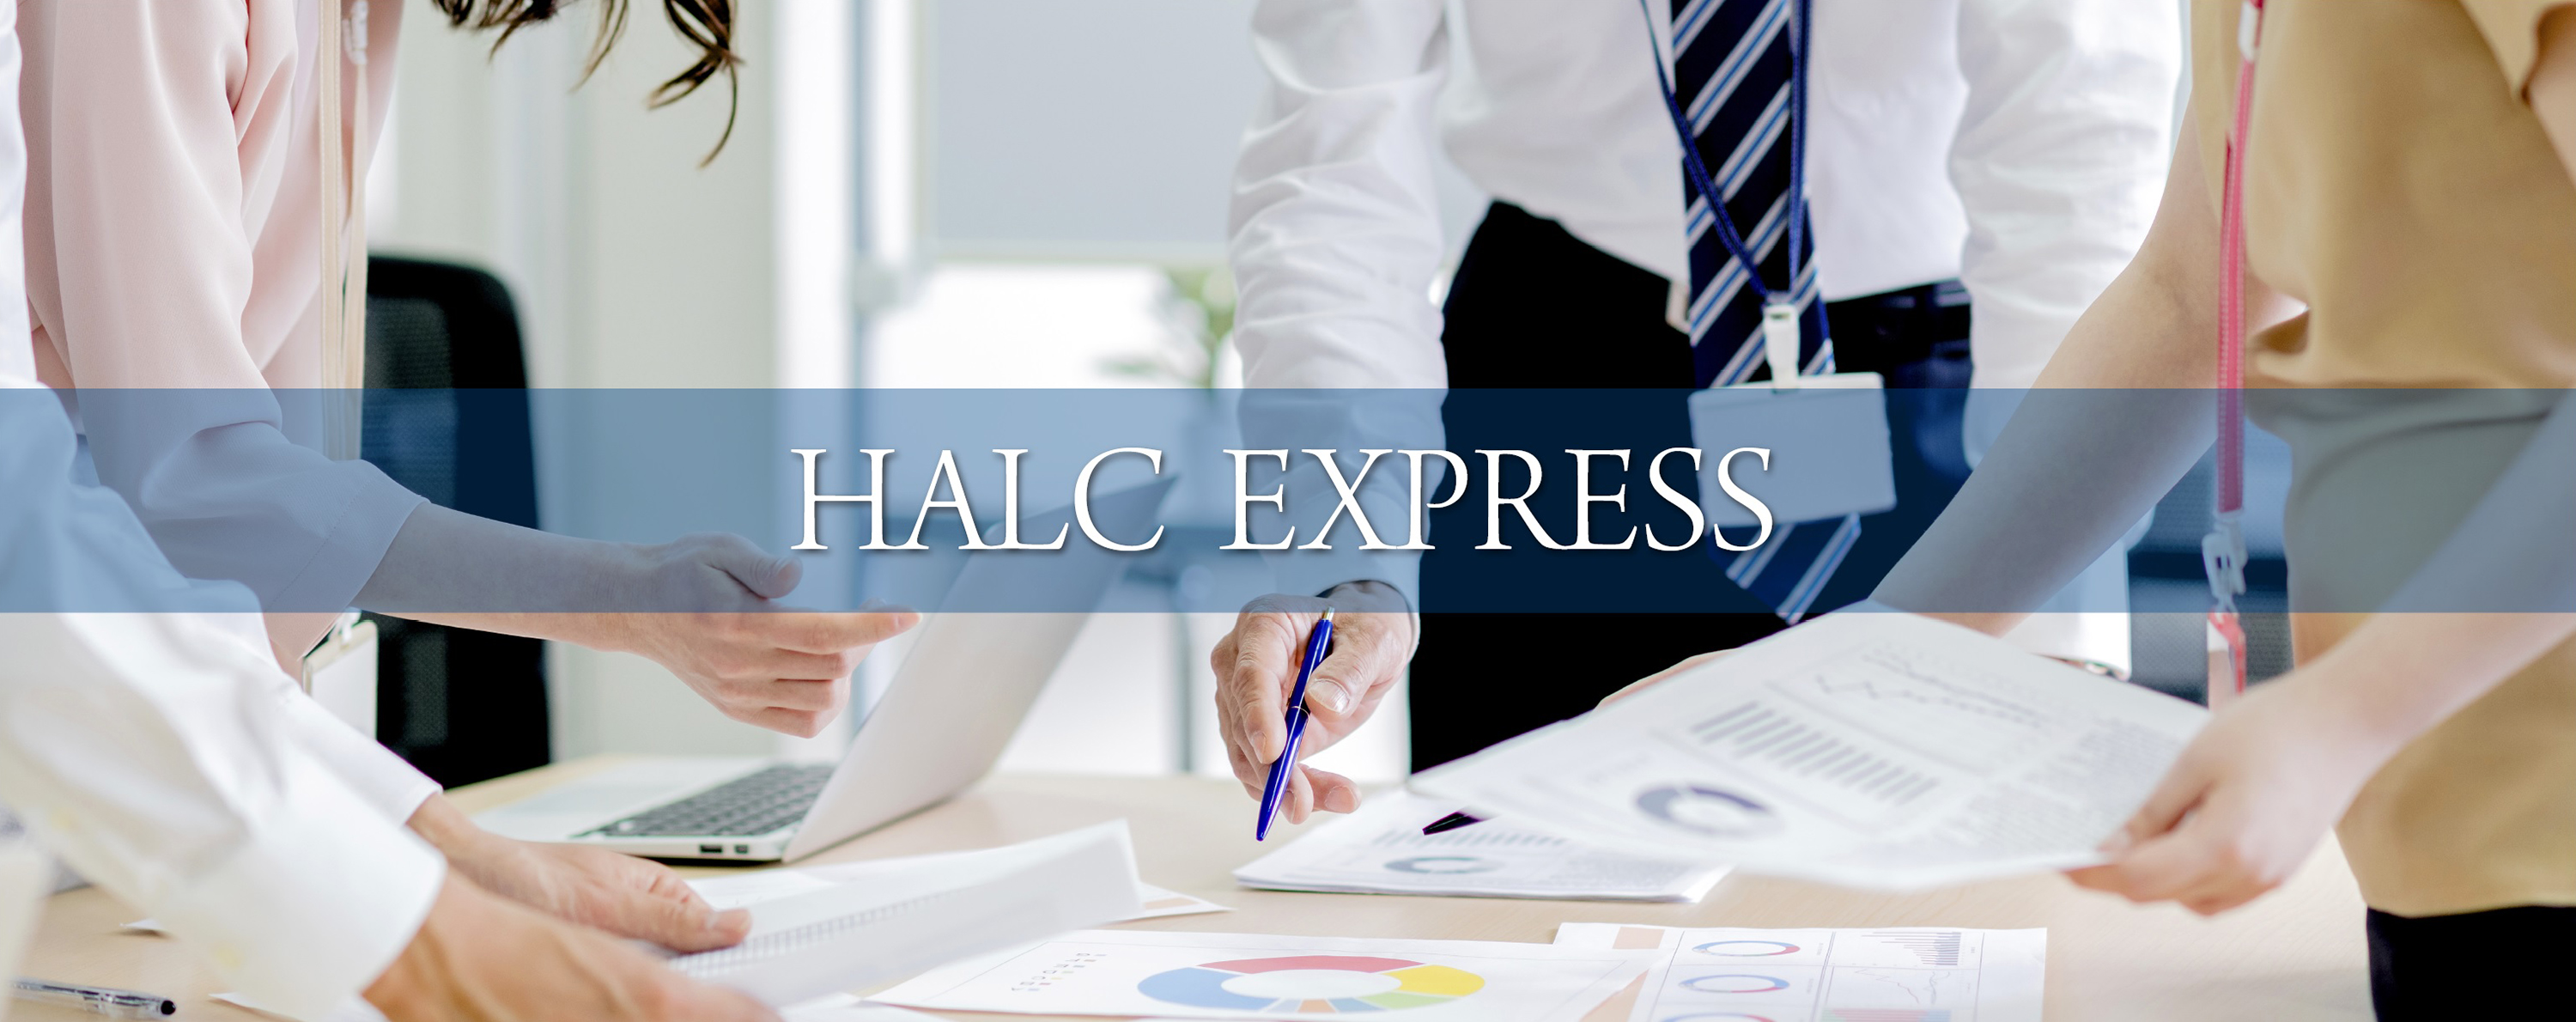 HALC EXPRESS